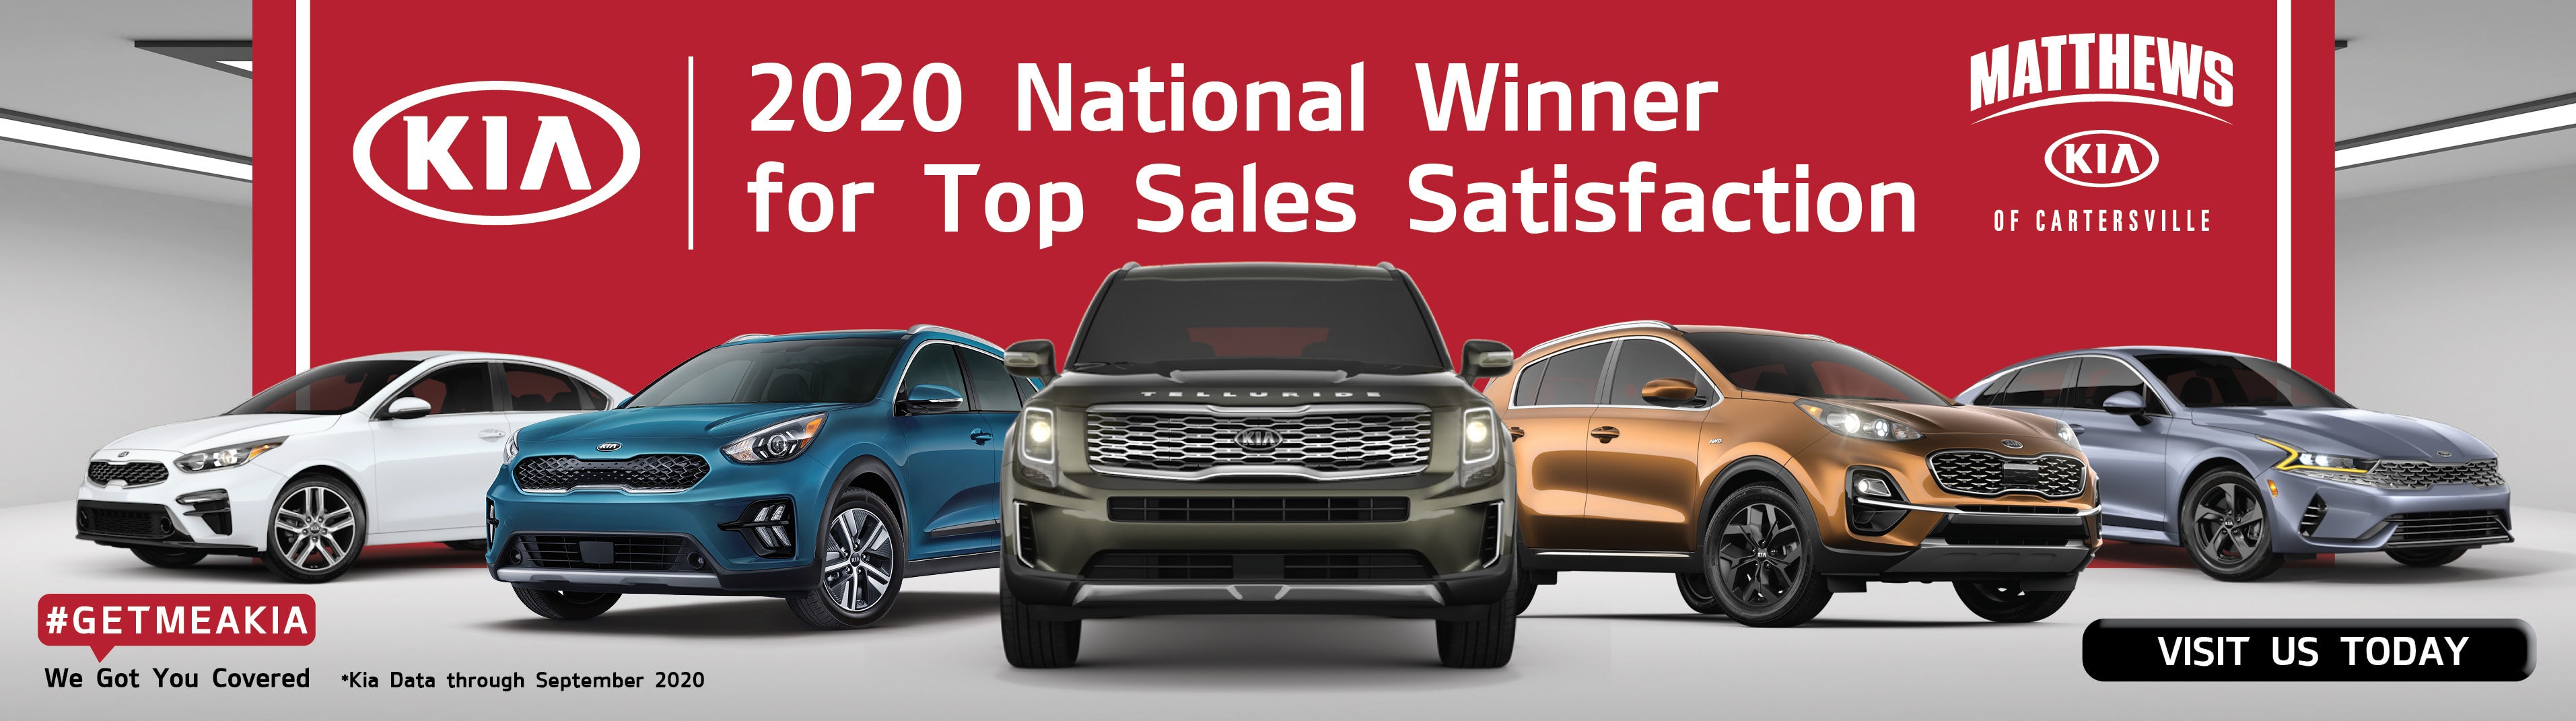 2020 National Winner for Top Sales Satisfaction